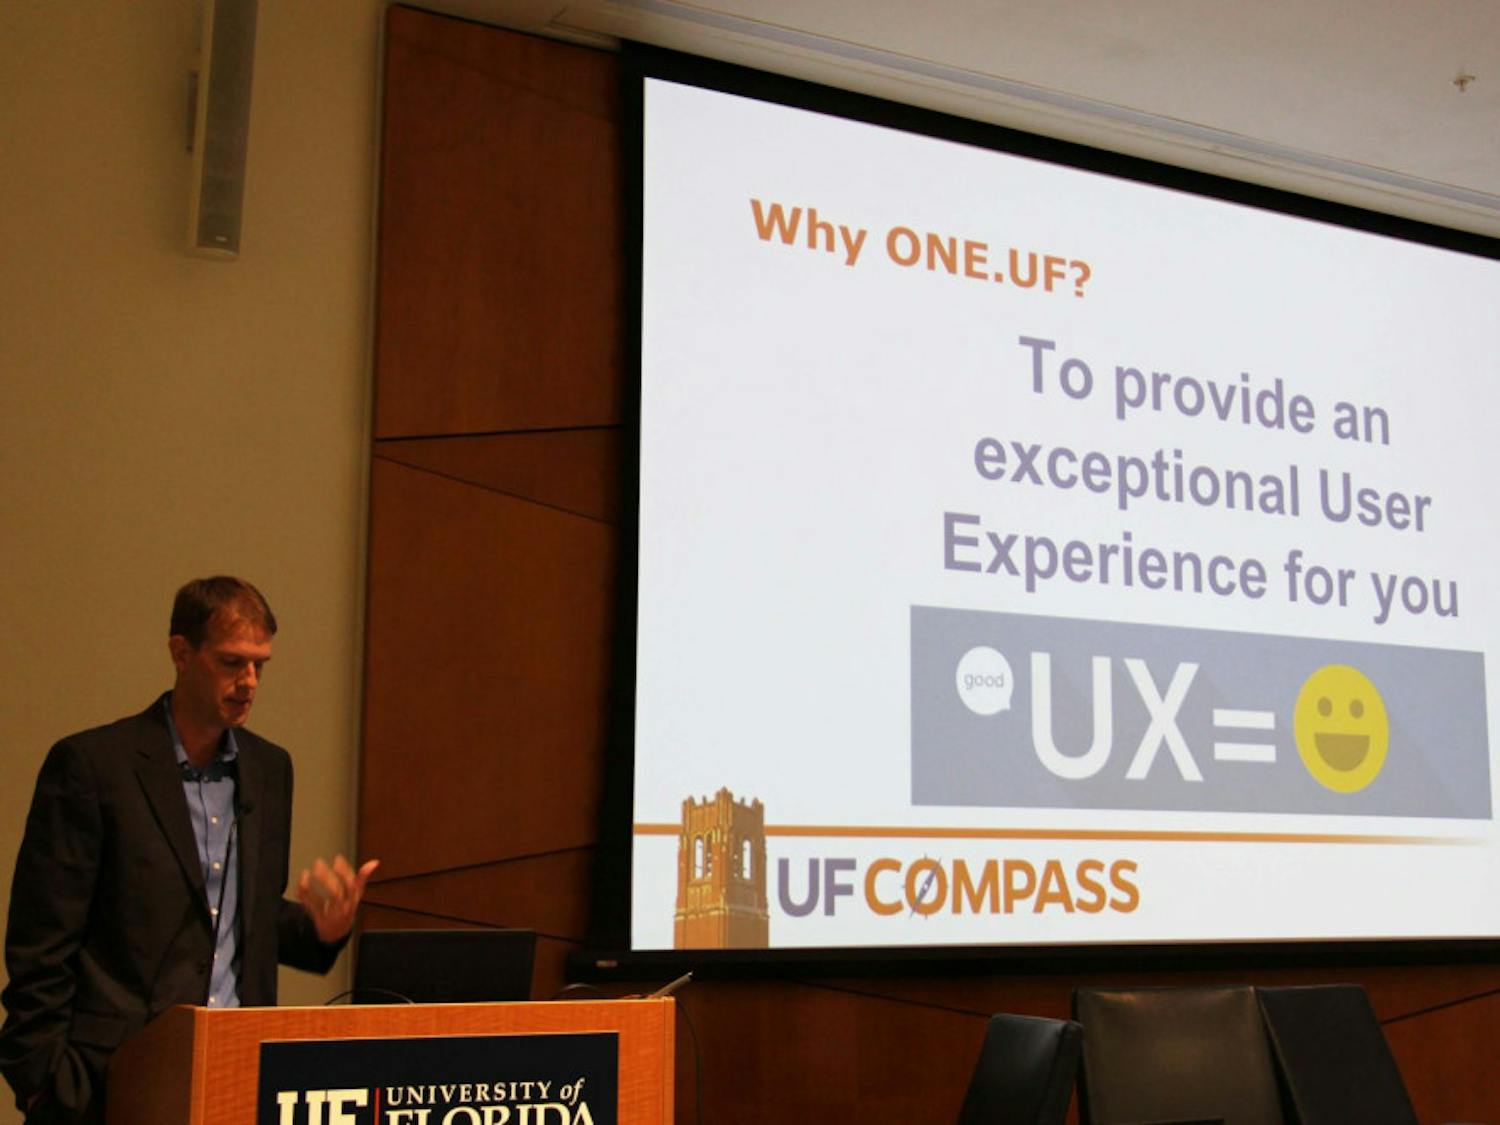 Jacob Prater, a UF Information Technology Application Developer Analyst, giving a presentation on ONE.UF.